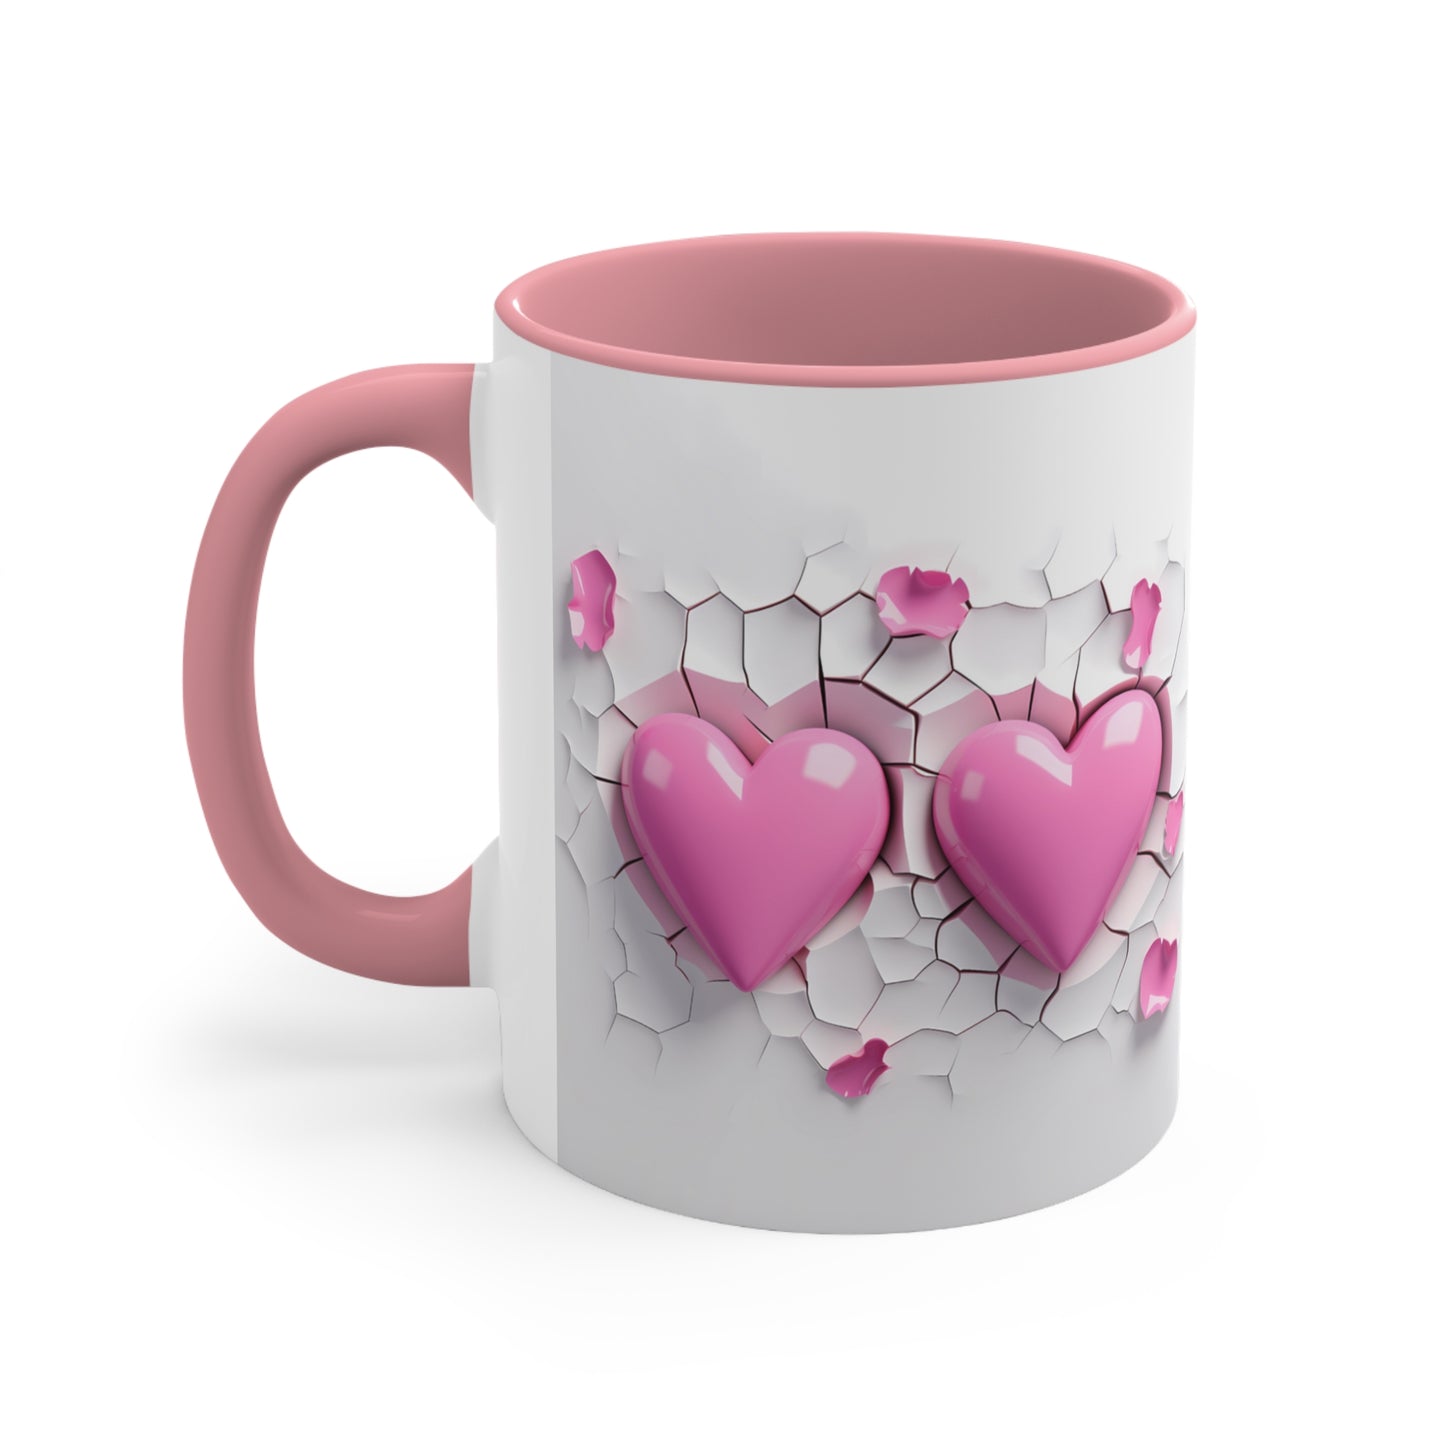 3D Valentine heart crack in the wall mug, couple mug, love heart couple mug, Funny Valentine Heart Candy, heart candy mug, conversation heart mug, Heart-Shaped Mug, Coffee Mug, 11oz